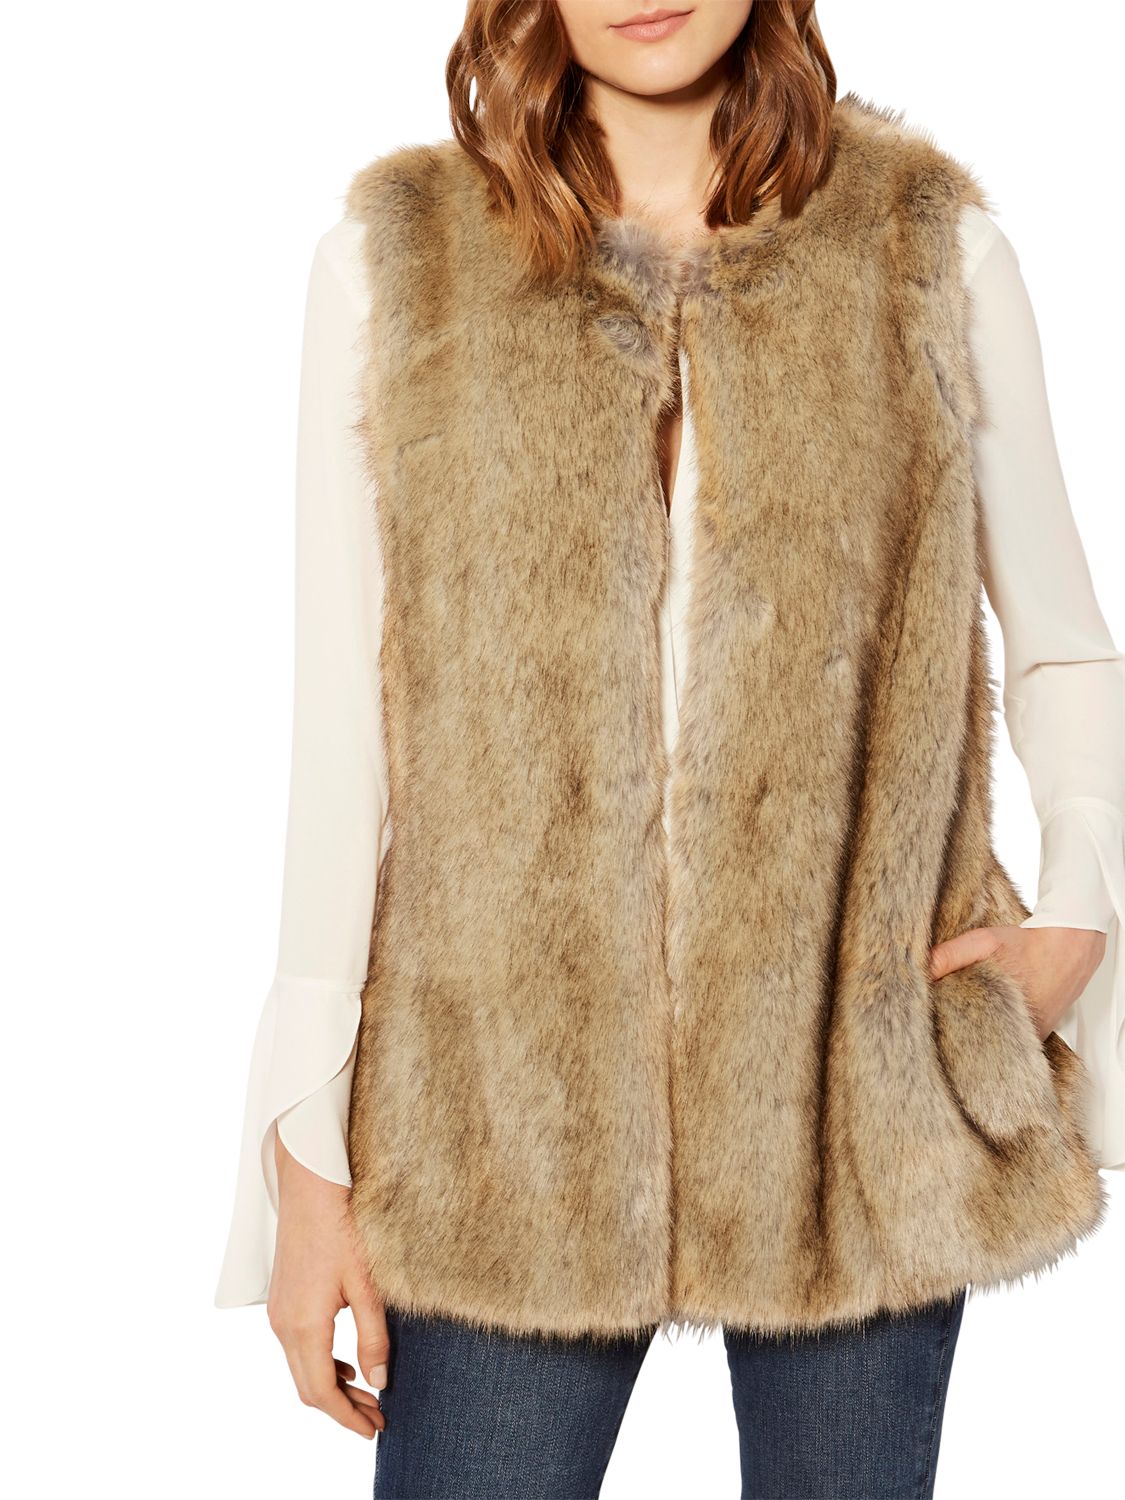 Karen Millen Luxury Faux Fur Gilet Reviews